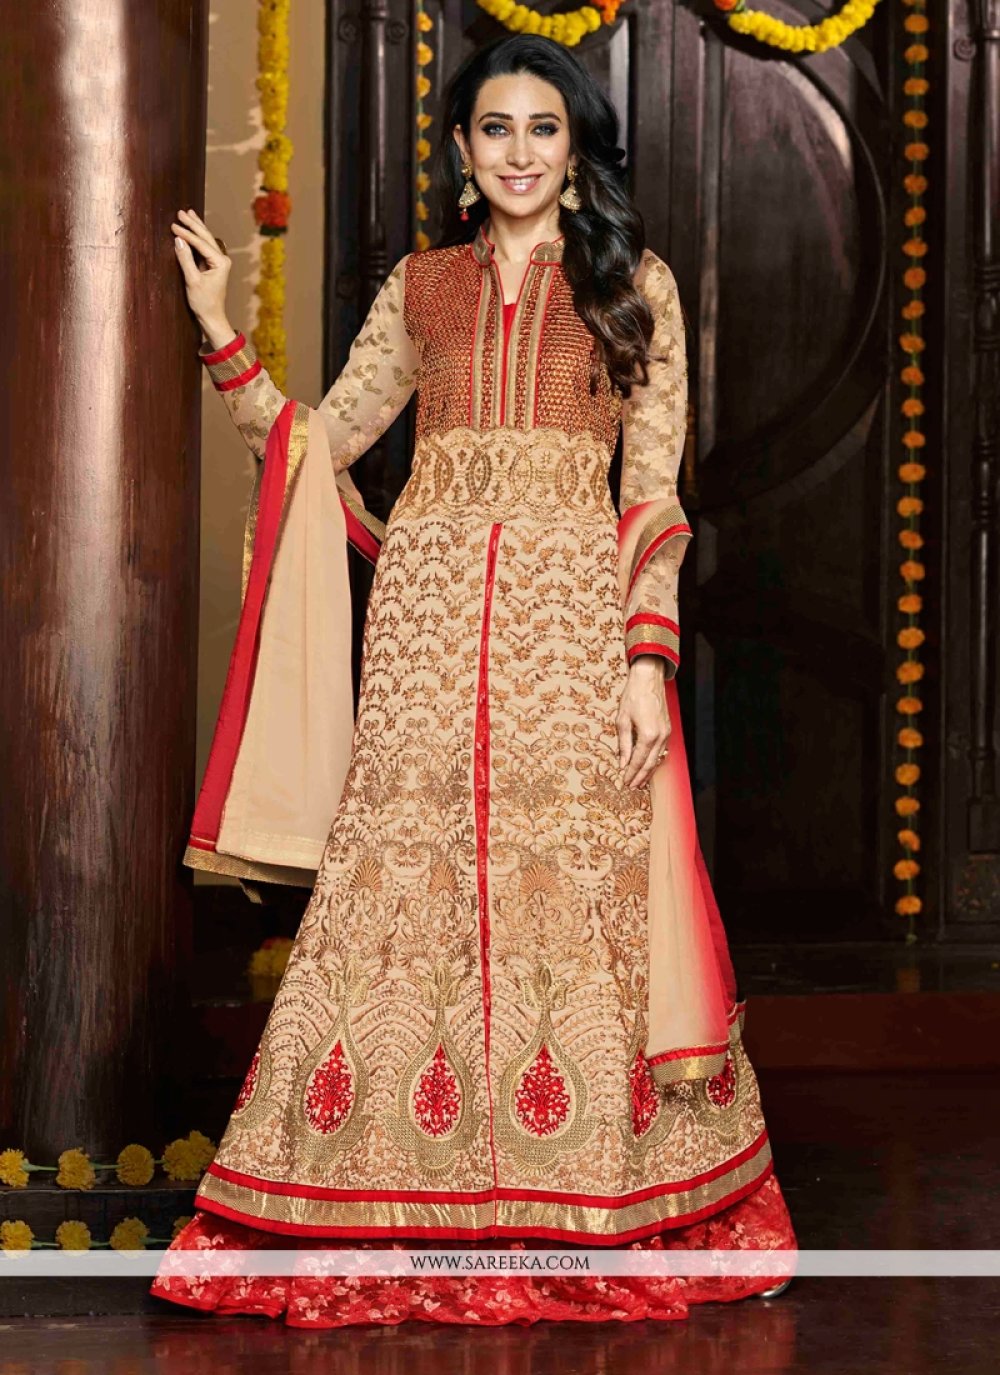 Buy Shardhha Kapoor in Red Lehenga Online from EthnicPlus for ₹2549